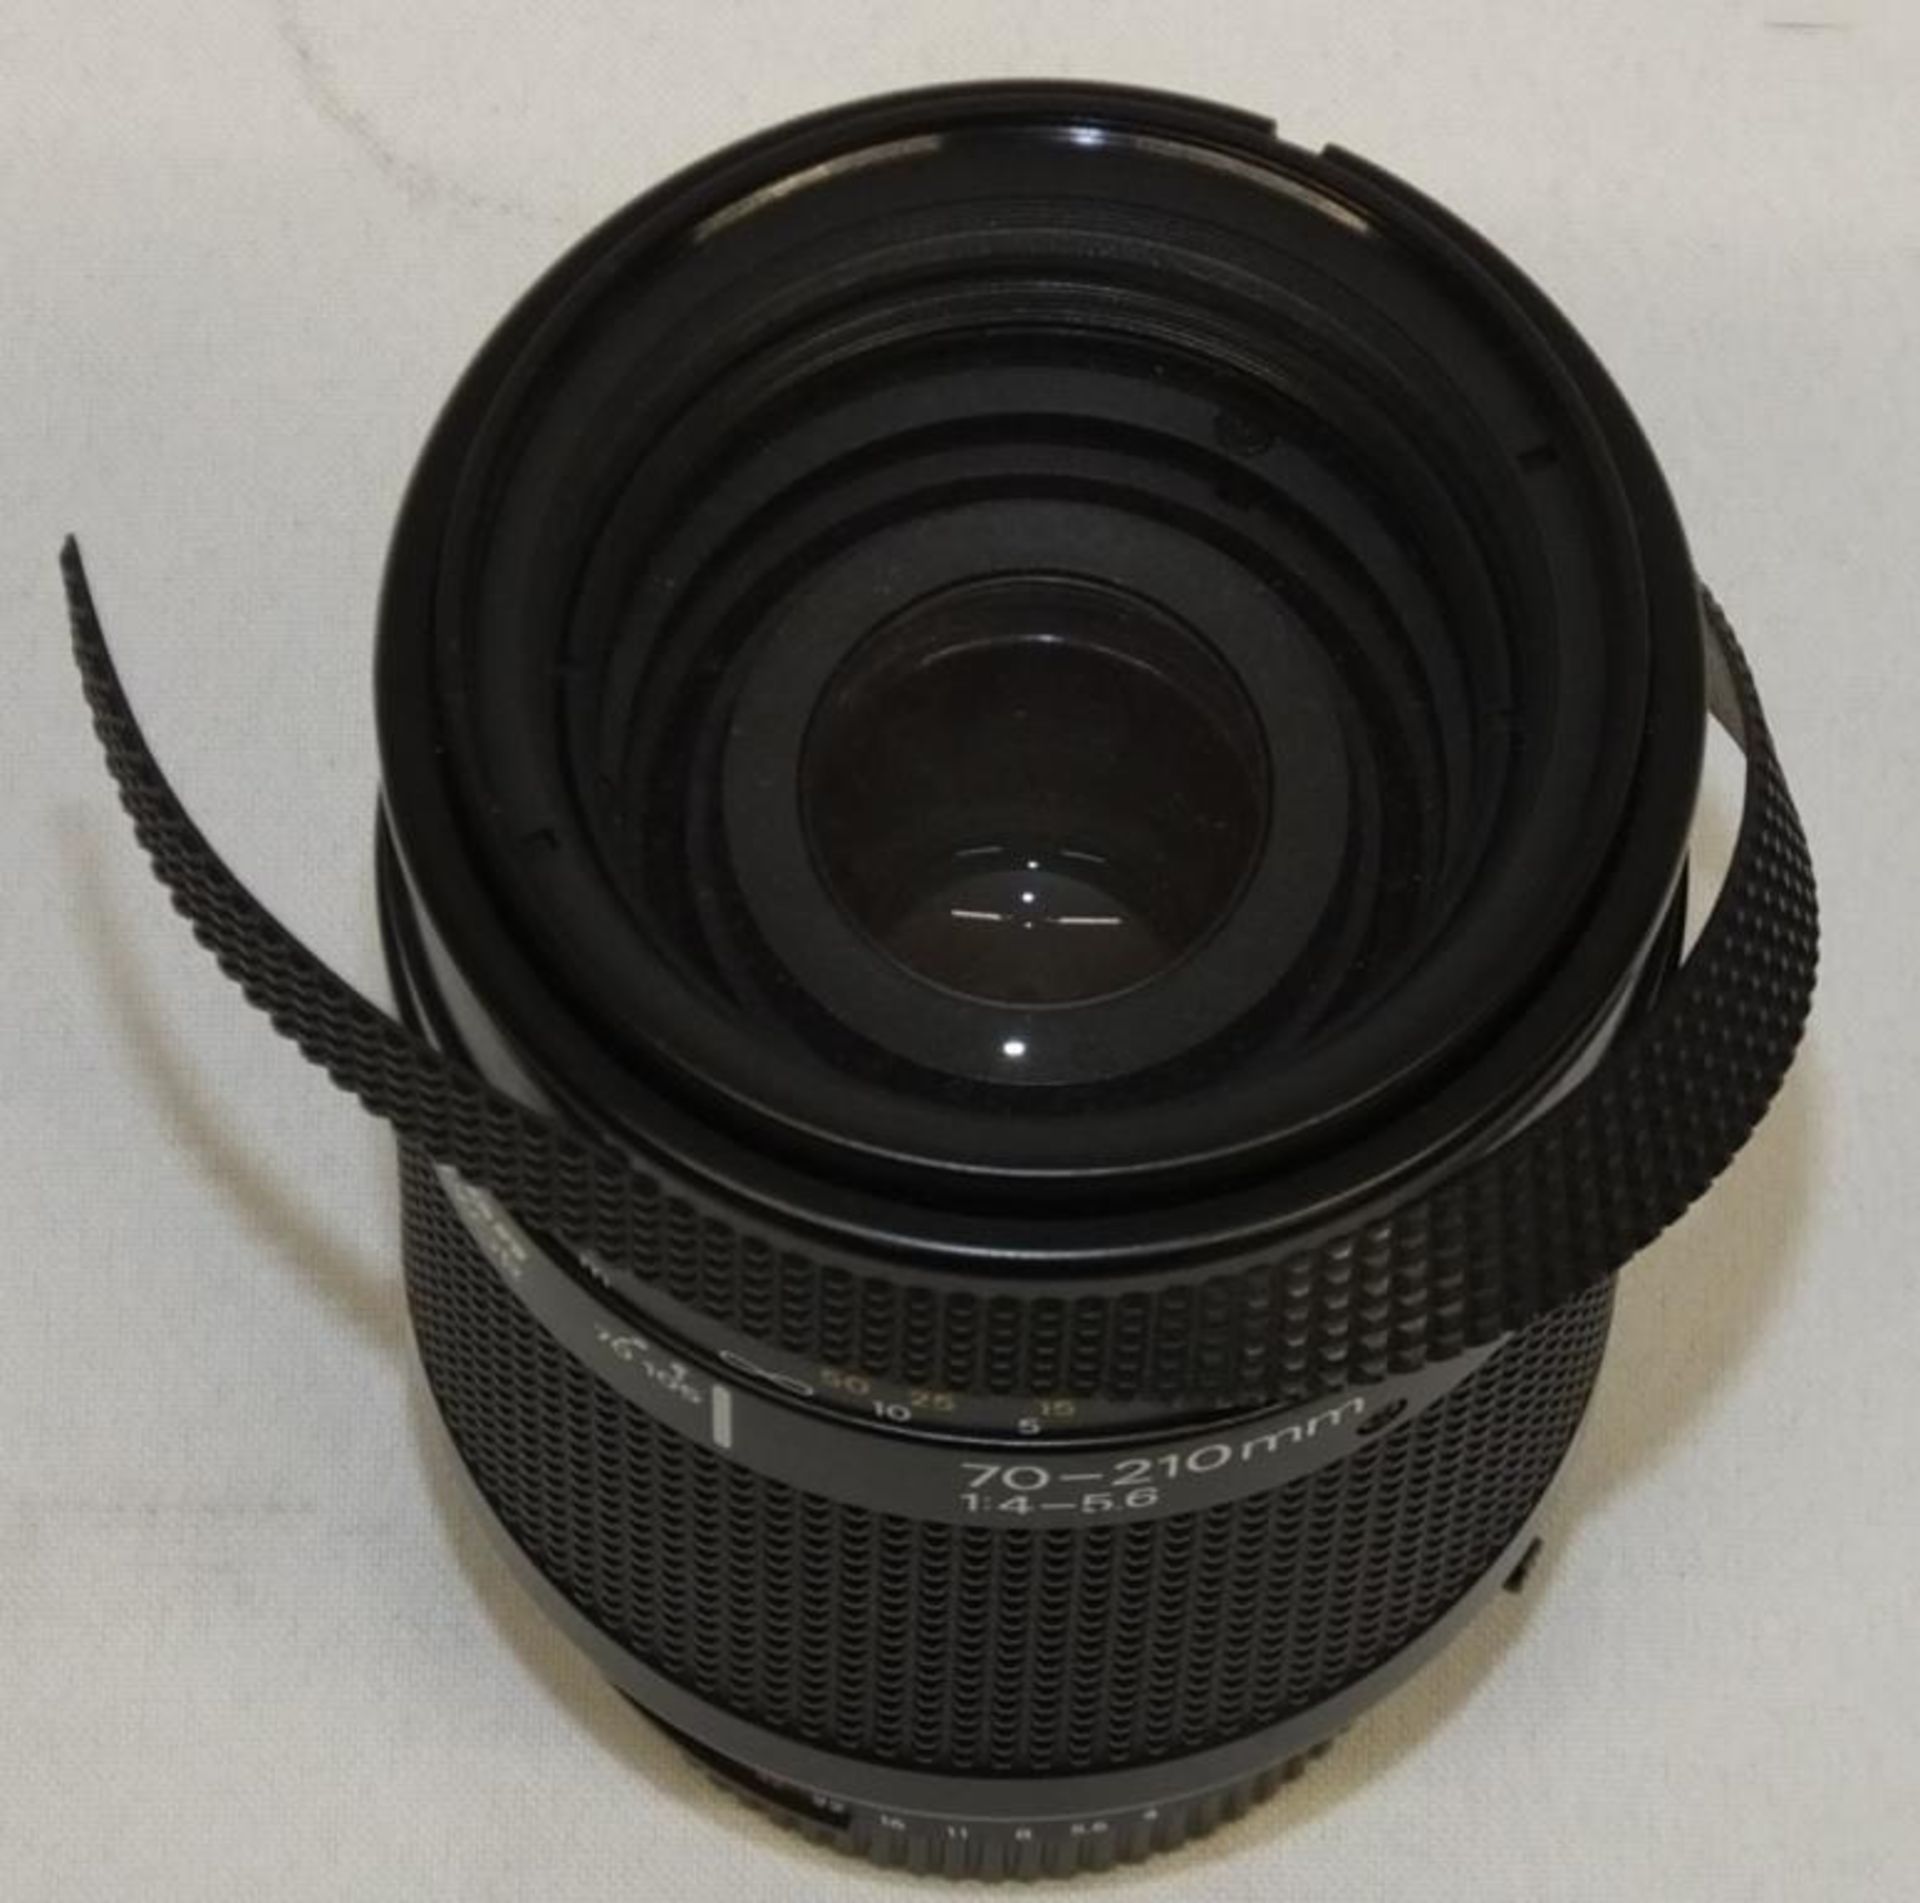 Nikon AF Nikkor 70-210mm 1:4-5.6 Lens - Serial No. - 2432172 rubber grip coming away as seen in pics - Image 3 of 4